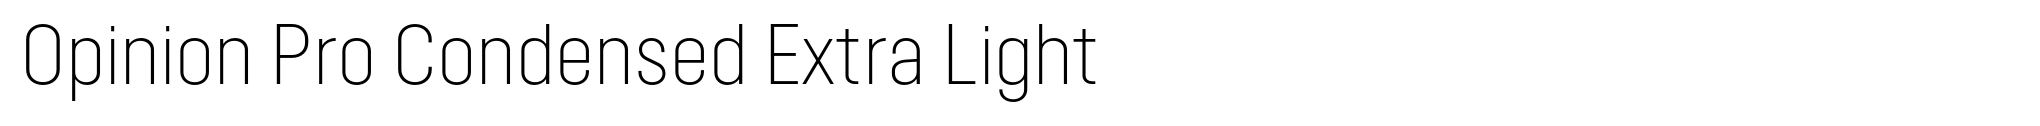 Opinion Pro Condensed Extra Light image